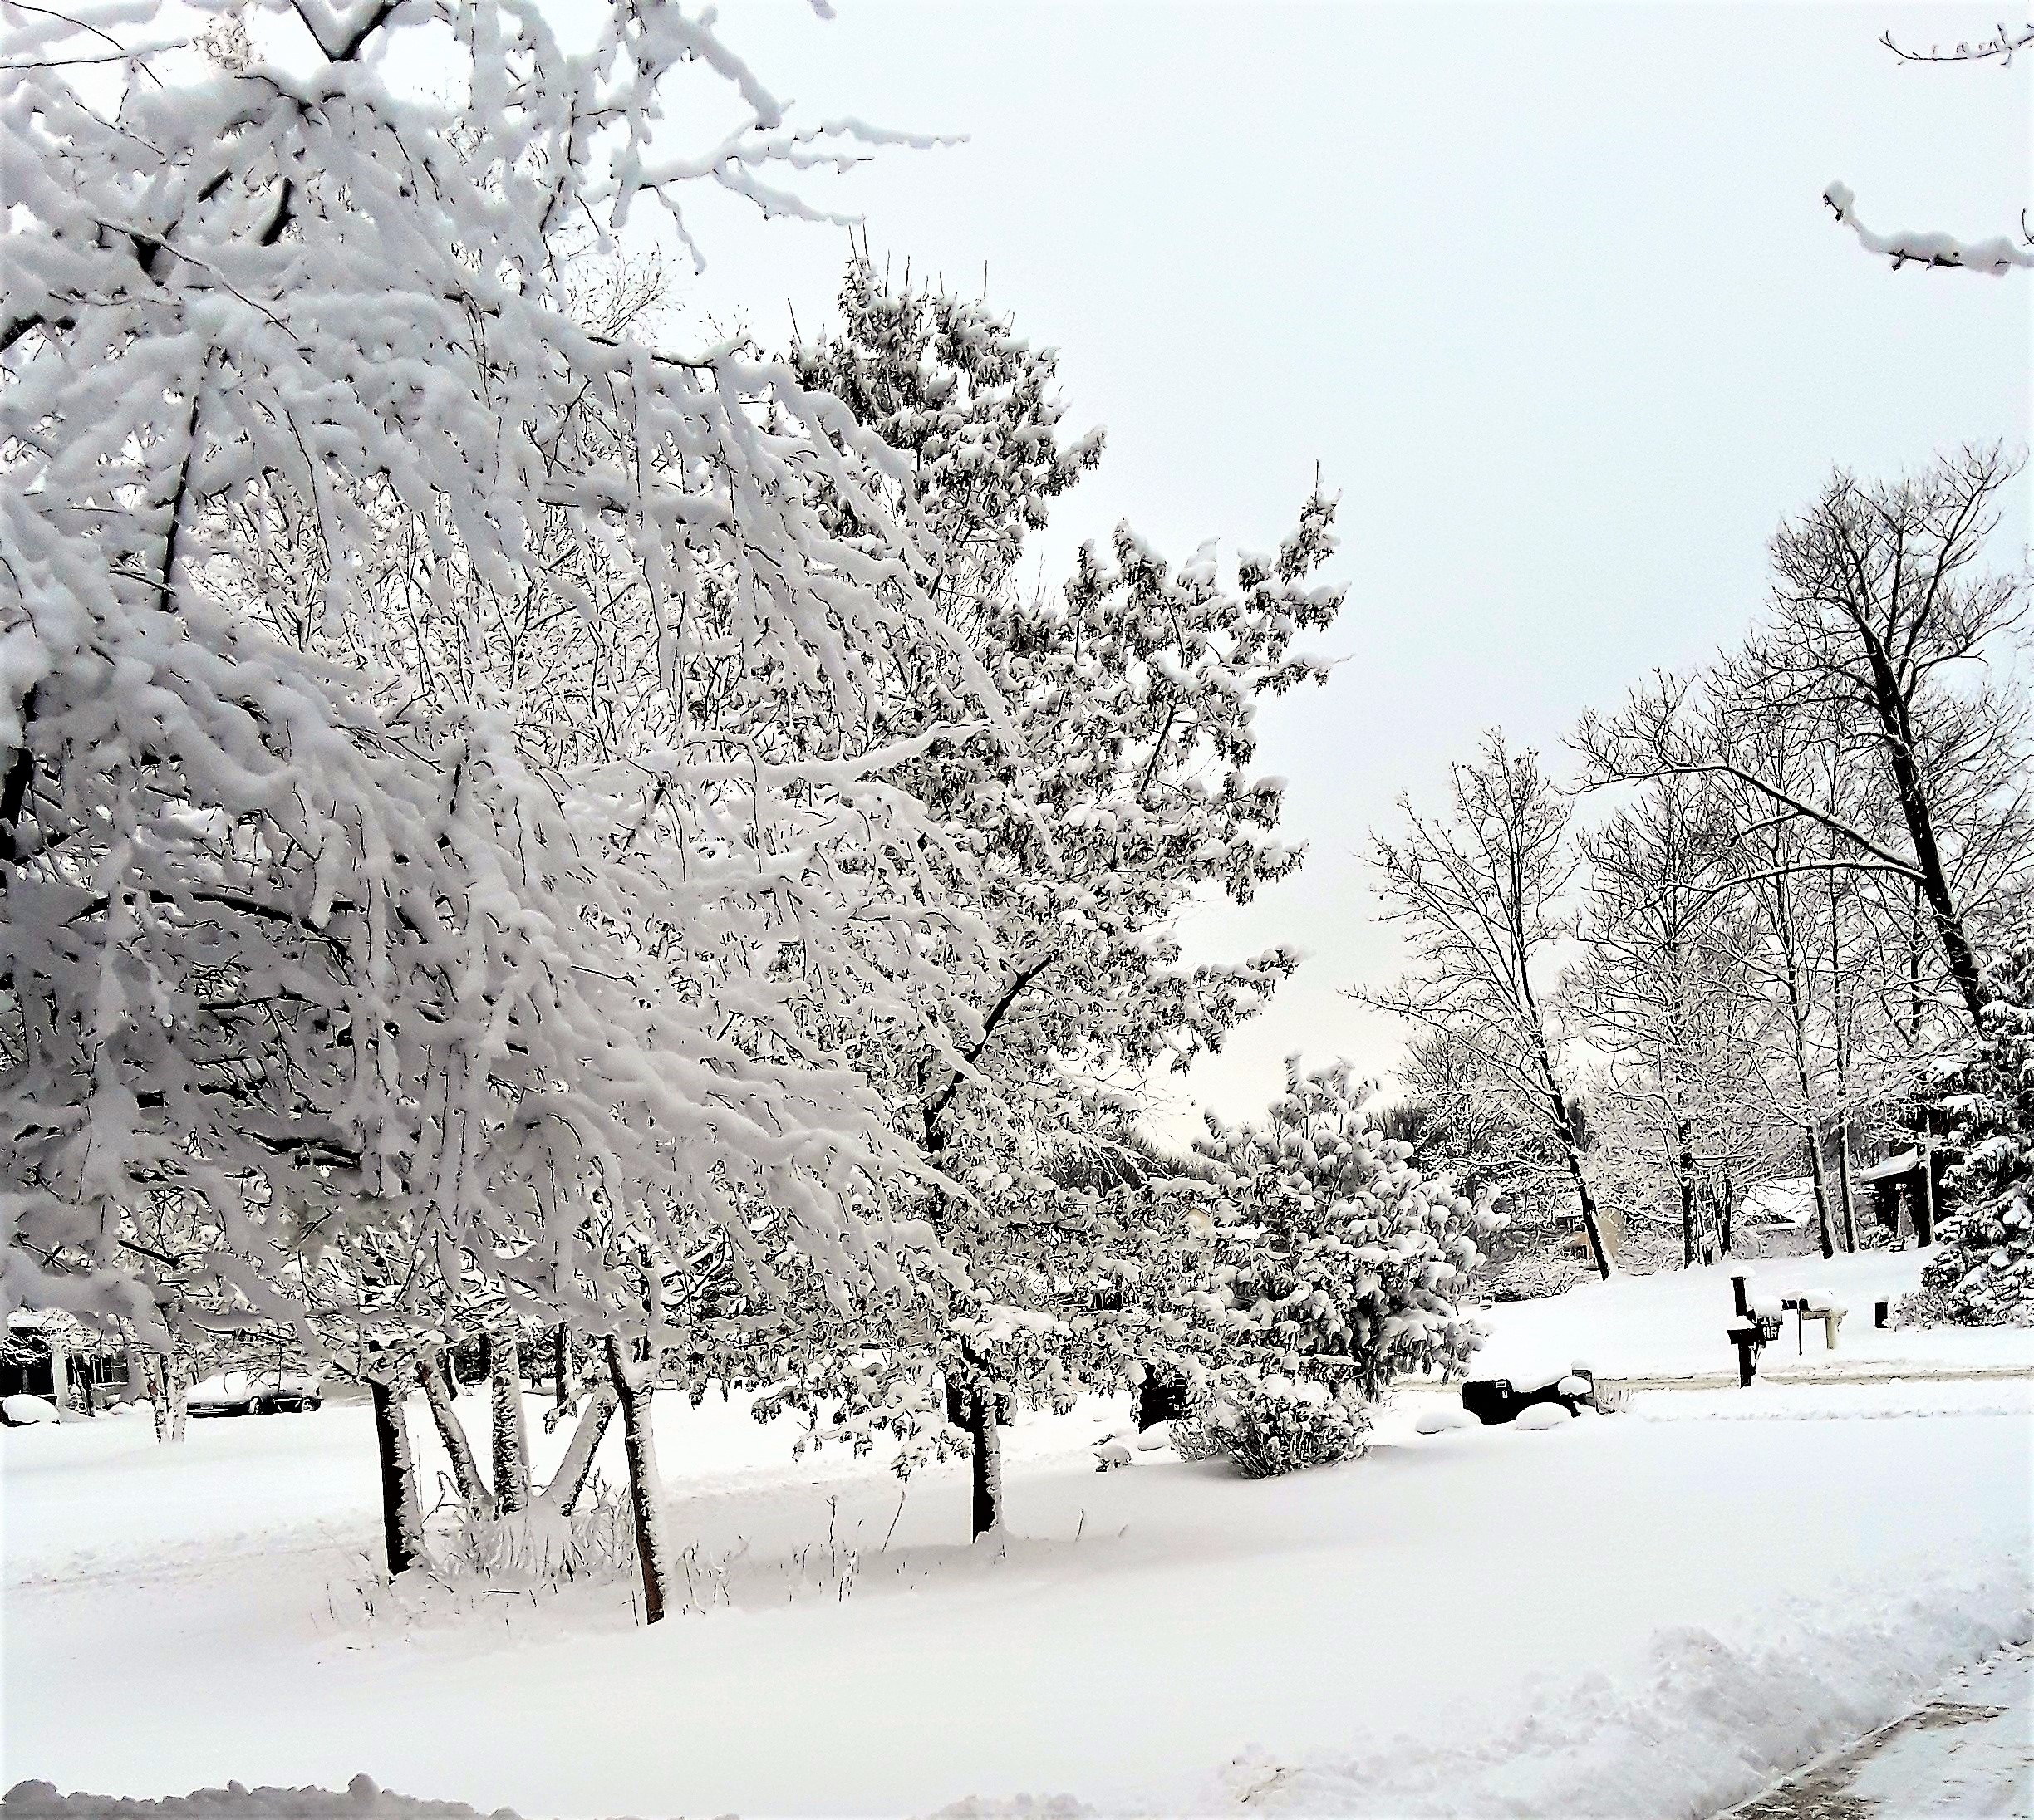 snowfall covers a suburban neighborhood